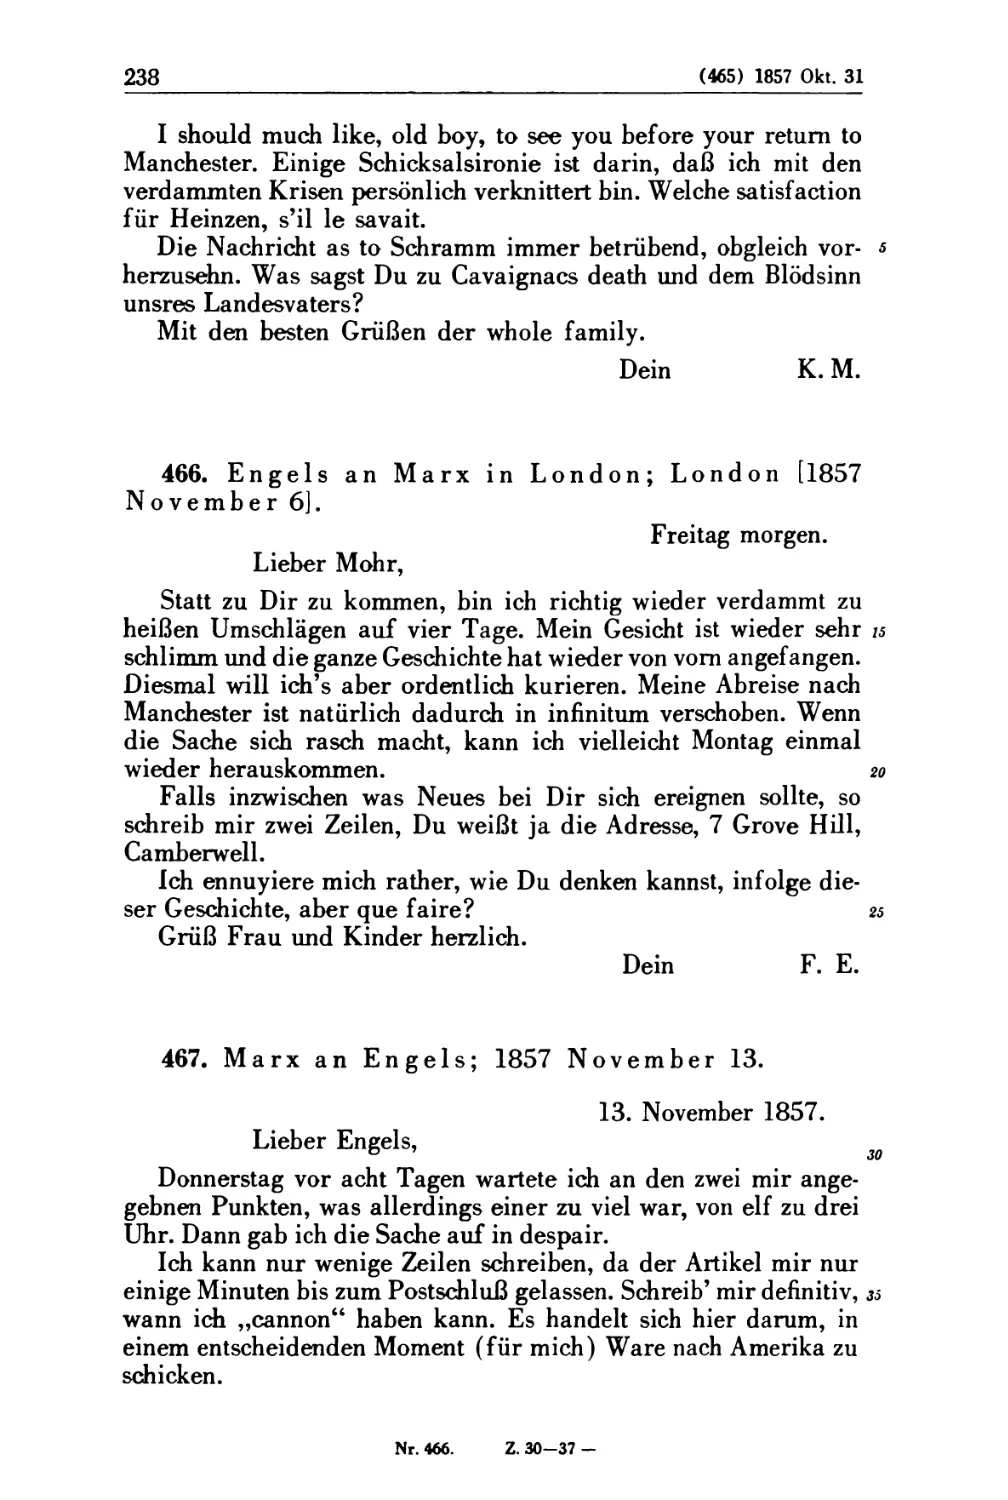 466. Engels an Marx in London; London [1857 November 6]
467. Marx an Engels; 1857 November 13